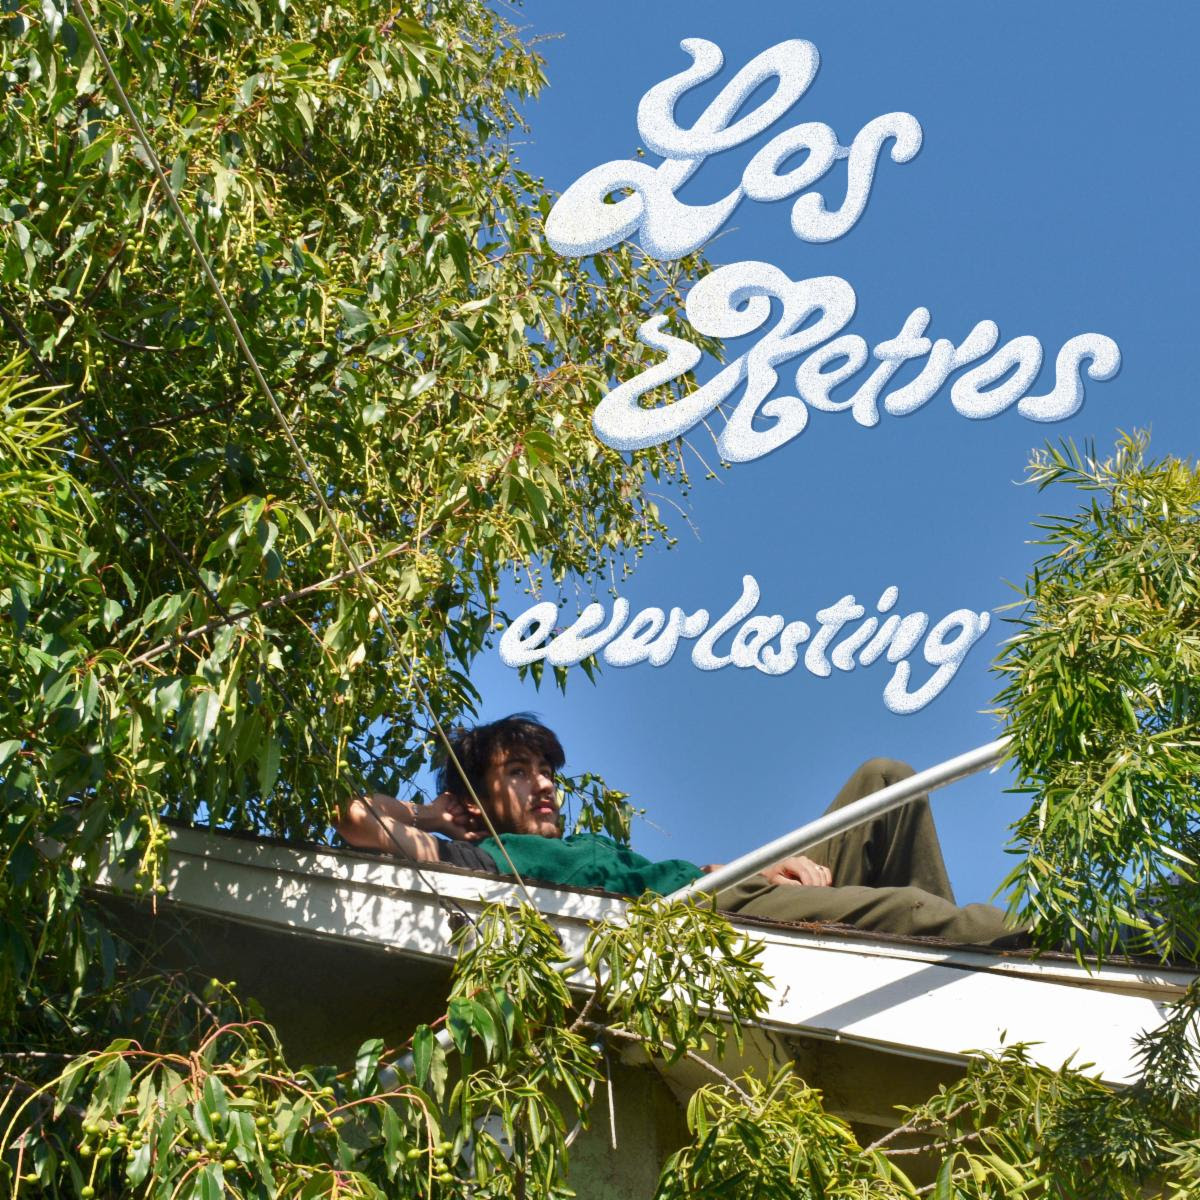 Los Retros announces his new EP Everlasting